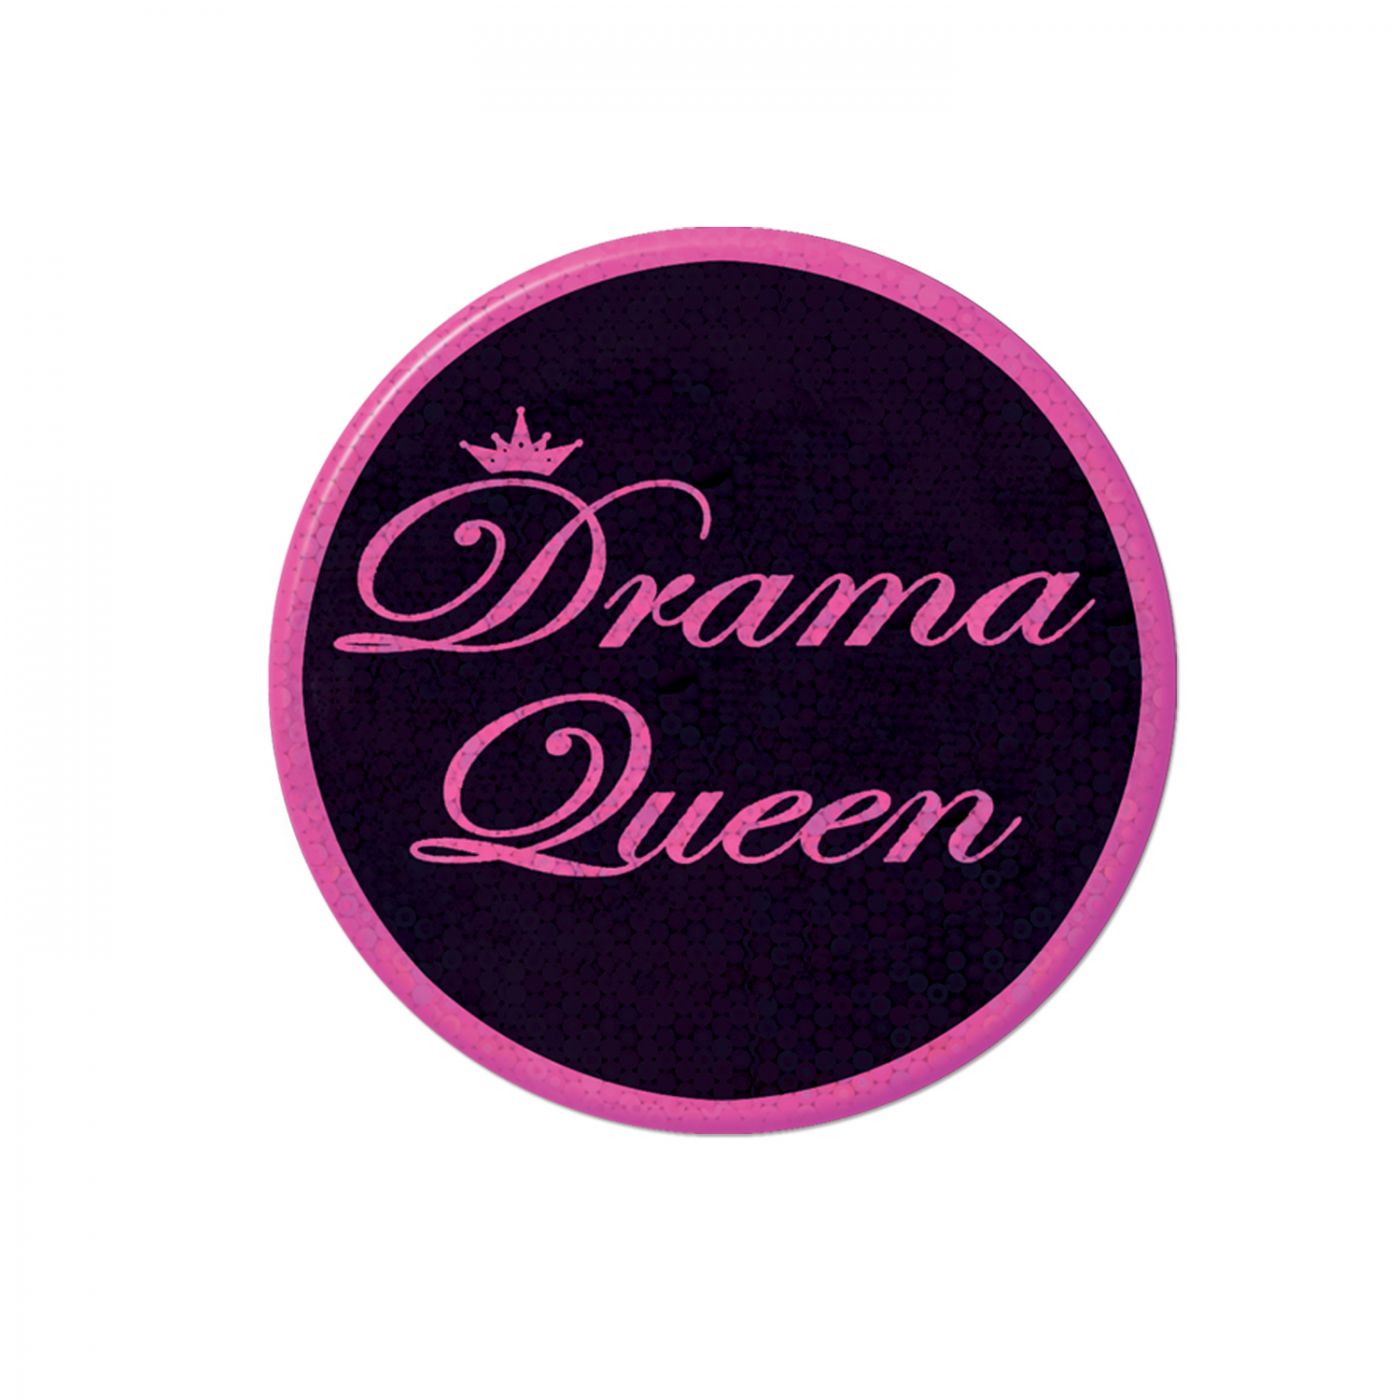 Drama Queen Button image